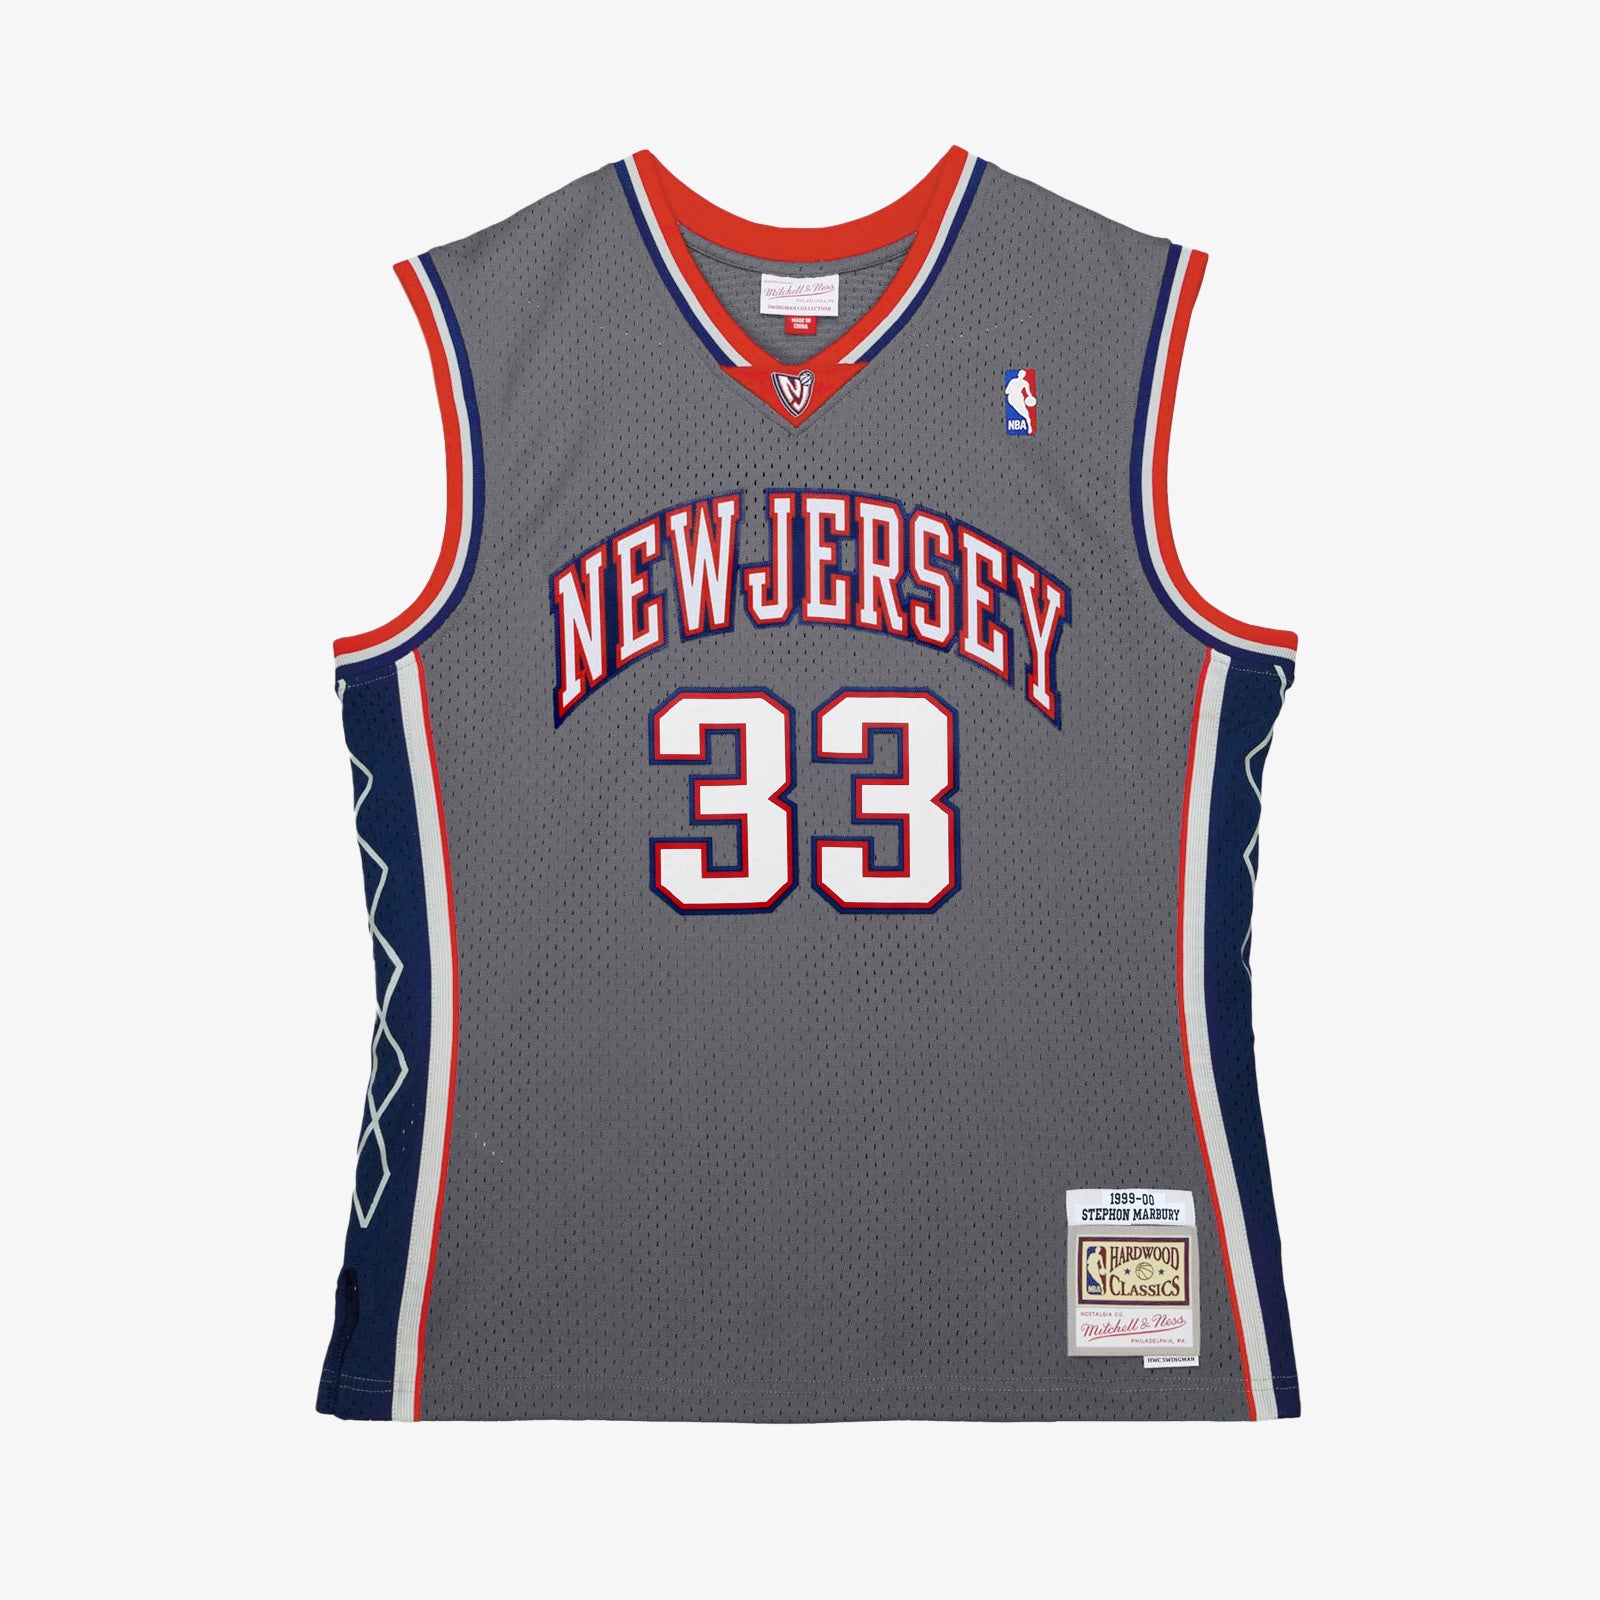 Miami Heat Jerseys 14 Herro Ado Basketball Jersey - China Basketball  Jersey and Los Angeles Laker Jersey price